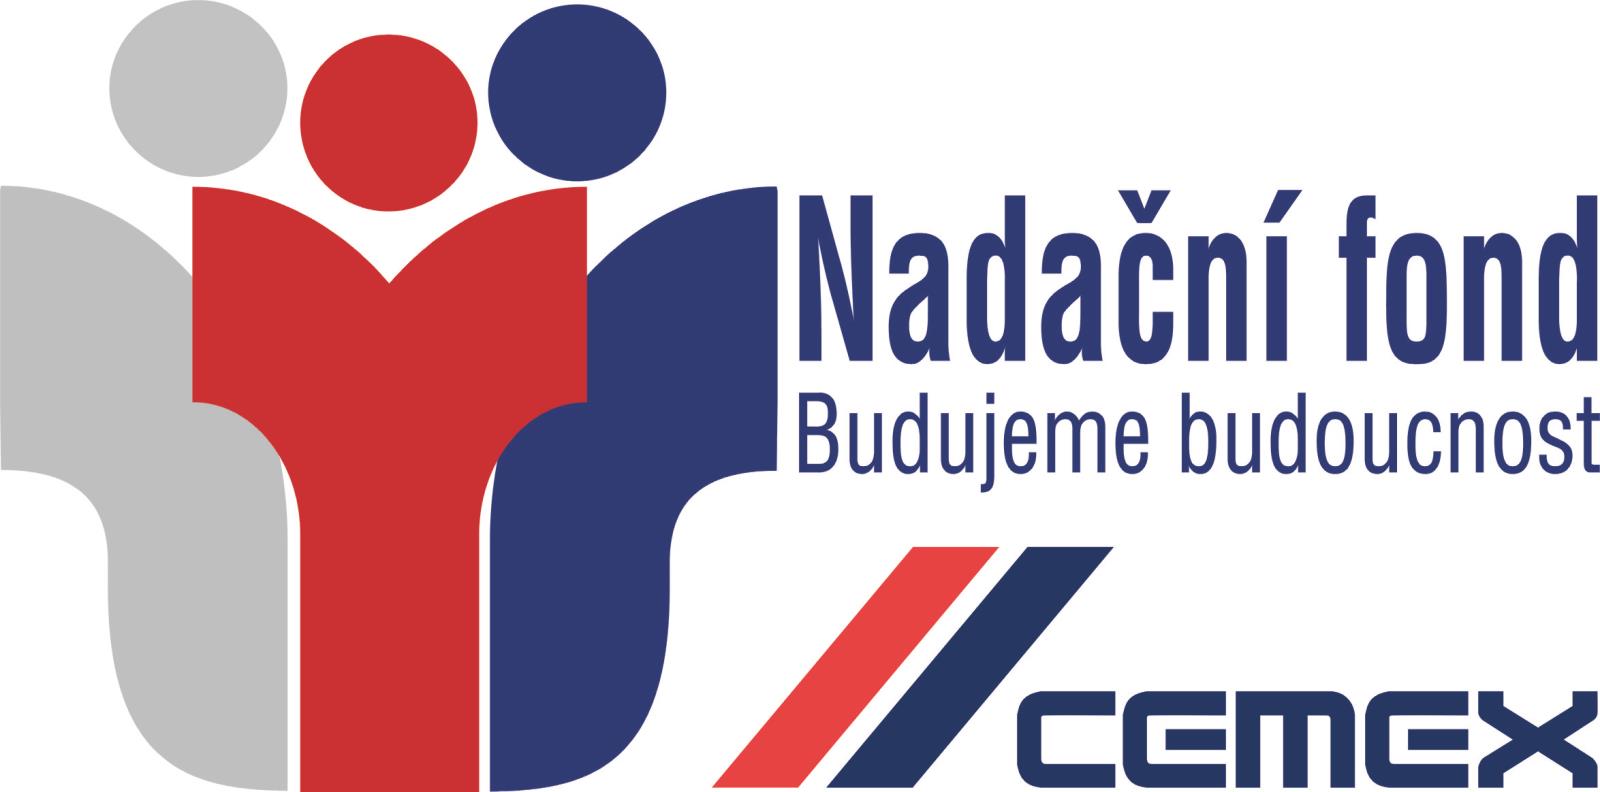 nadacni_fond_logo_good1.jpg